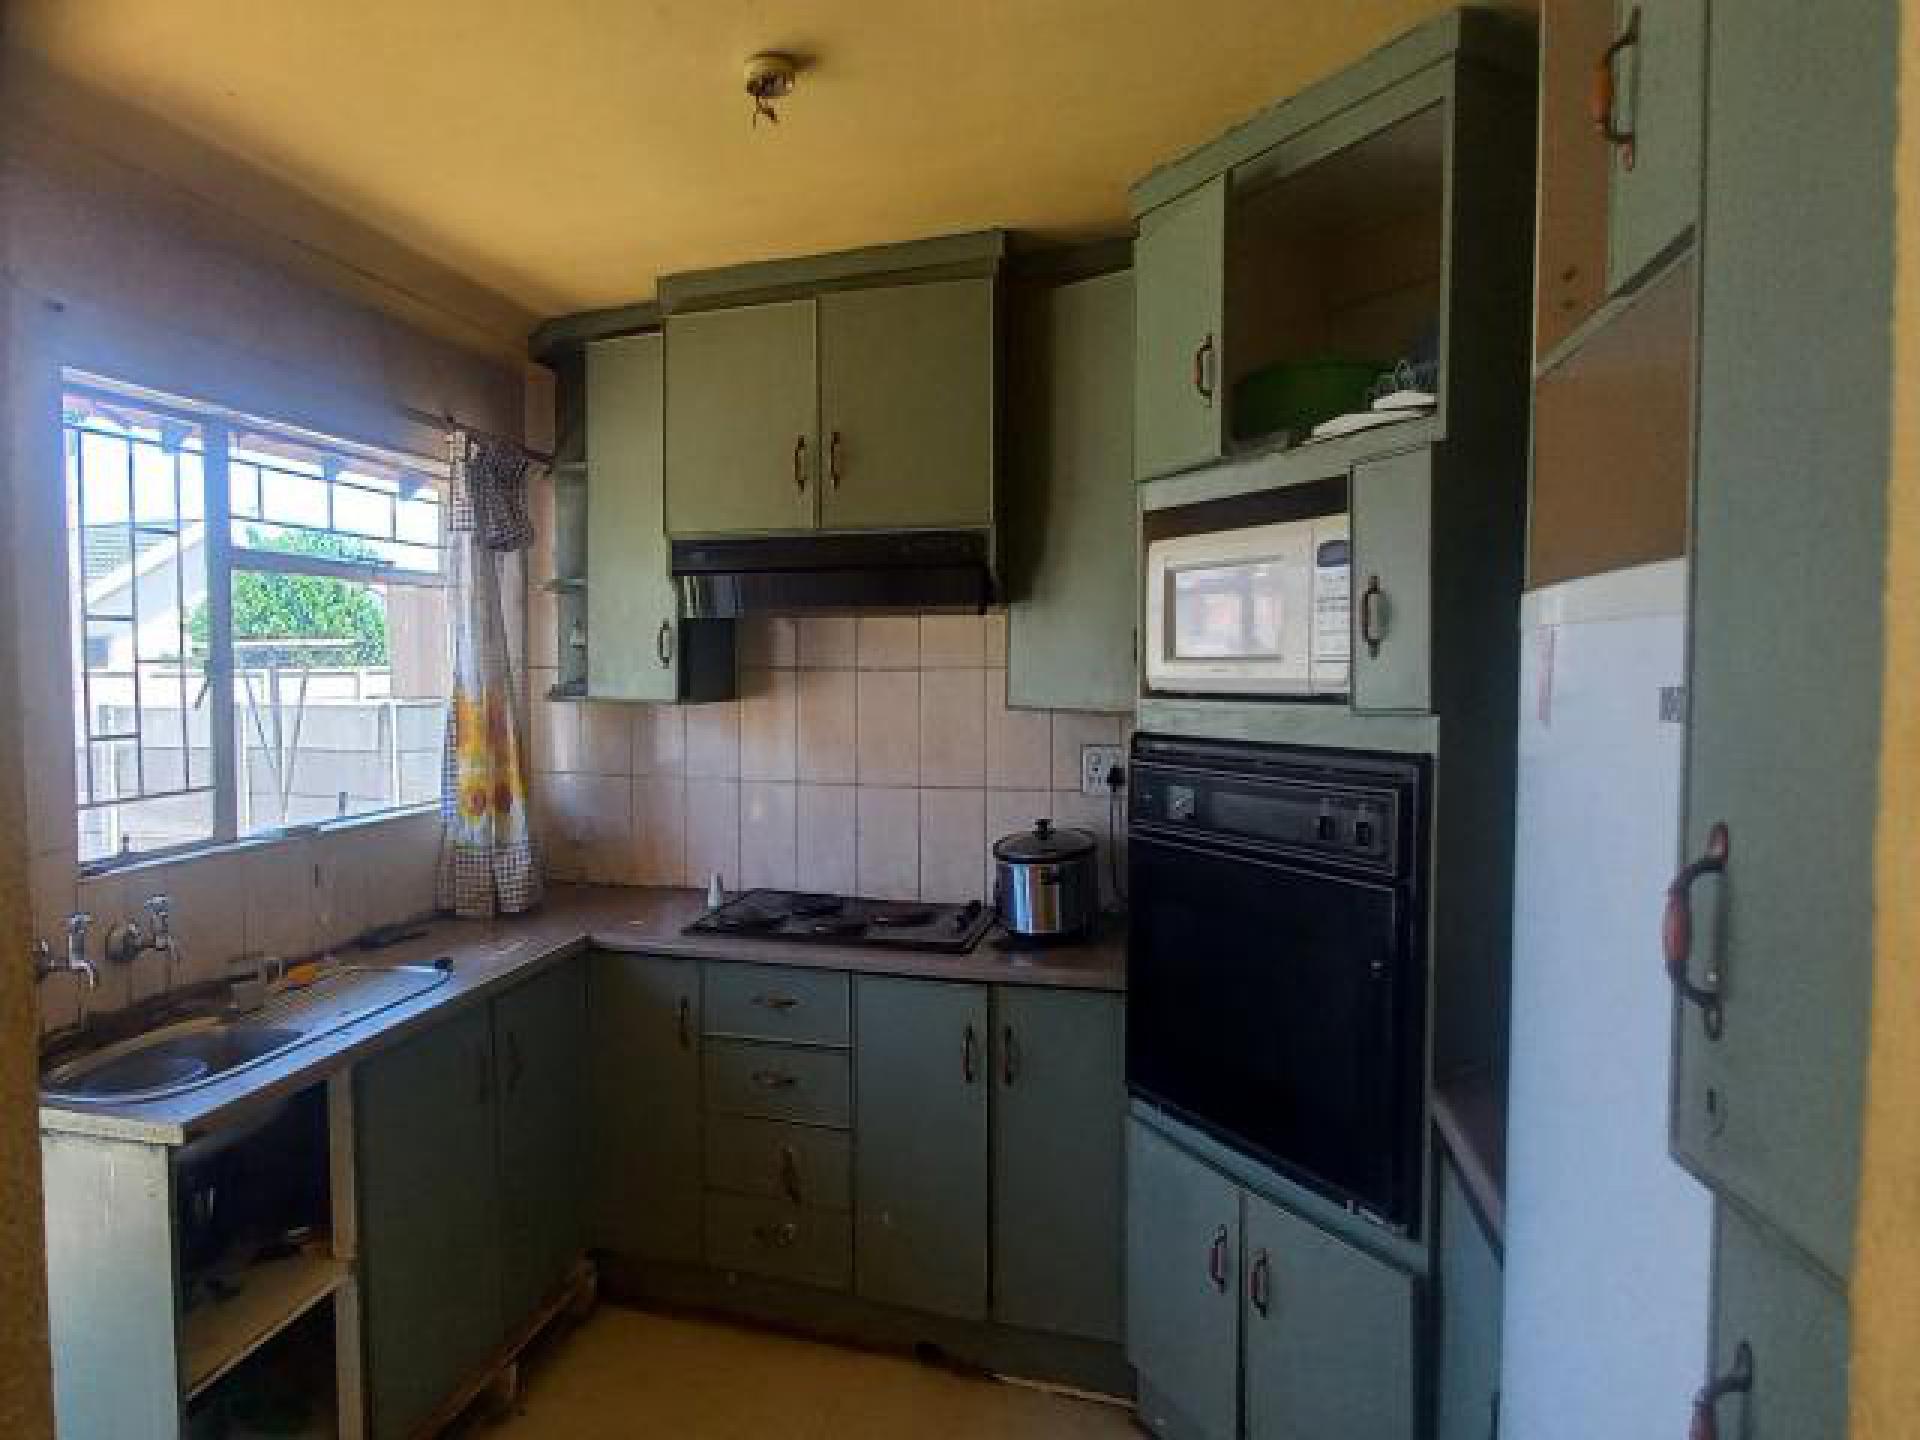 Kitchen of property in Welkom